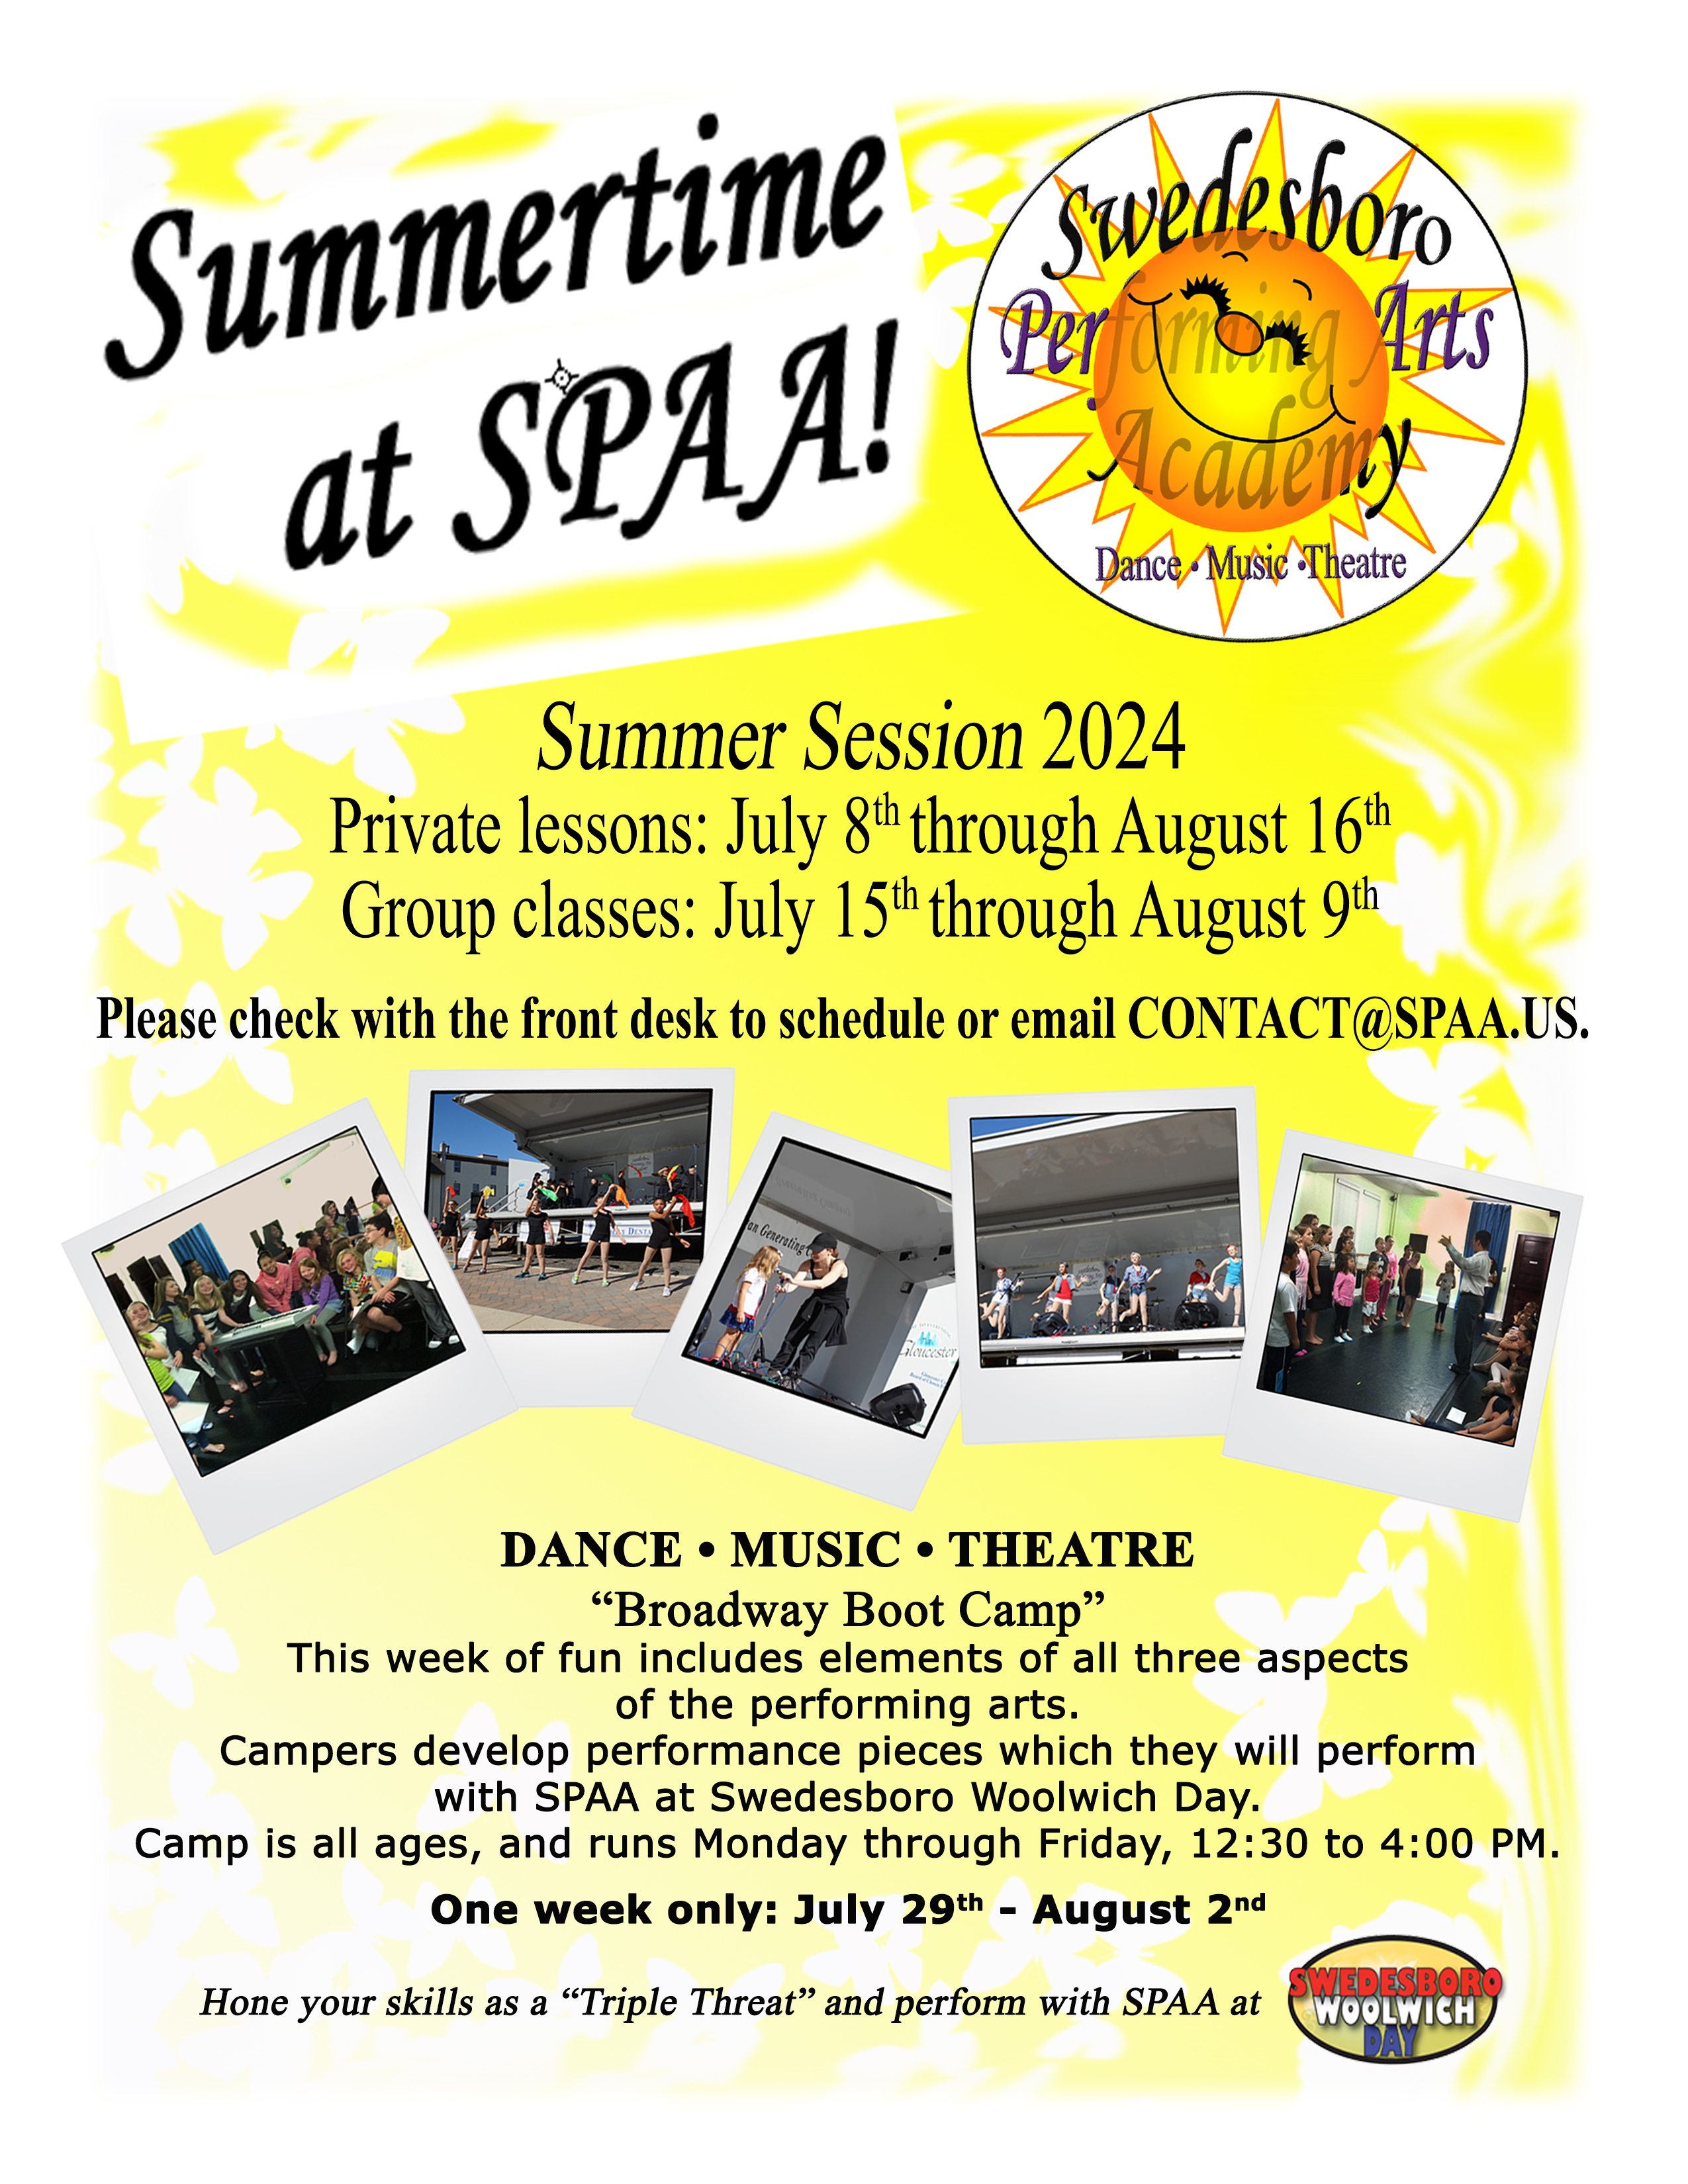 Swedesboro Performing Arts Academy: Dance, Music, Theatre